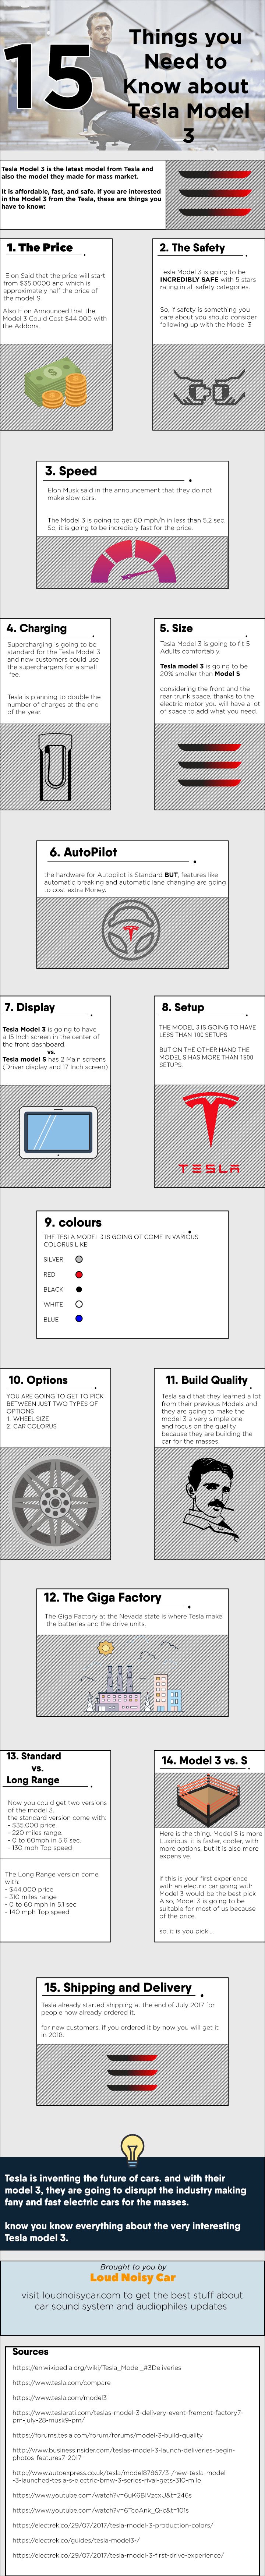 Tesla Model 3 Infographic